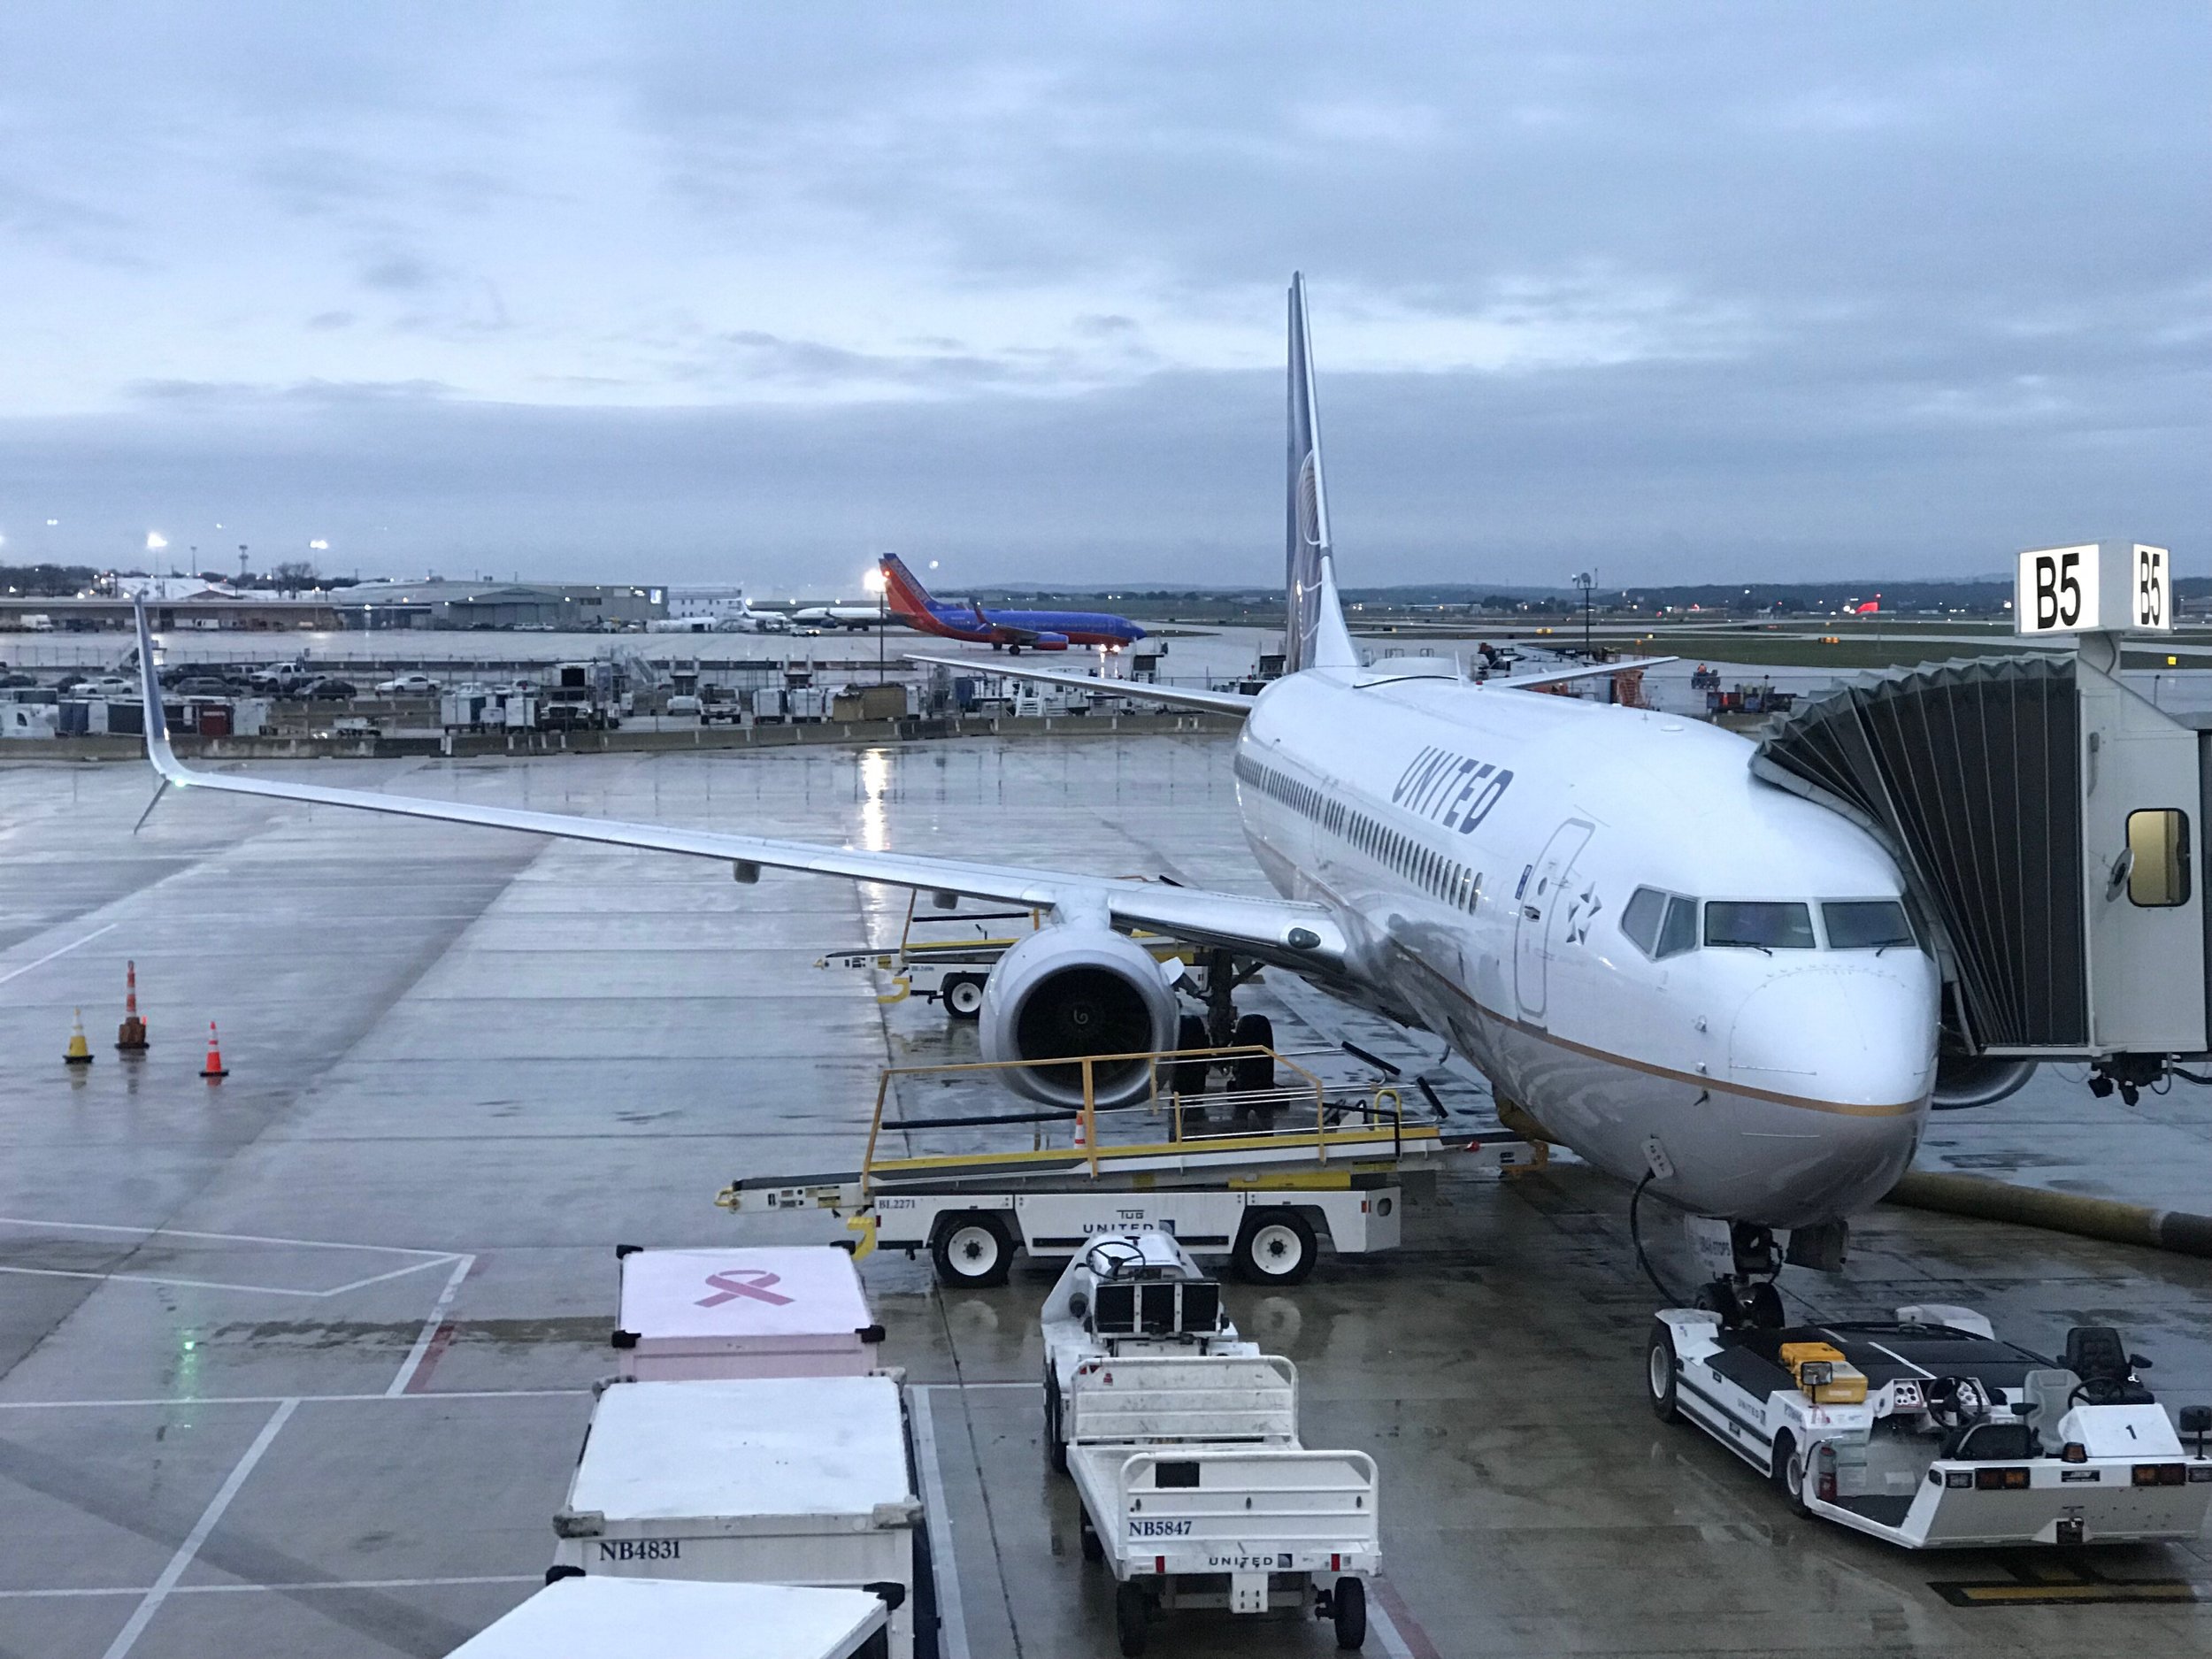 United Economy Plus / 737-900 / San Antonio-Denver — Officer Wayfinder